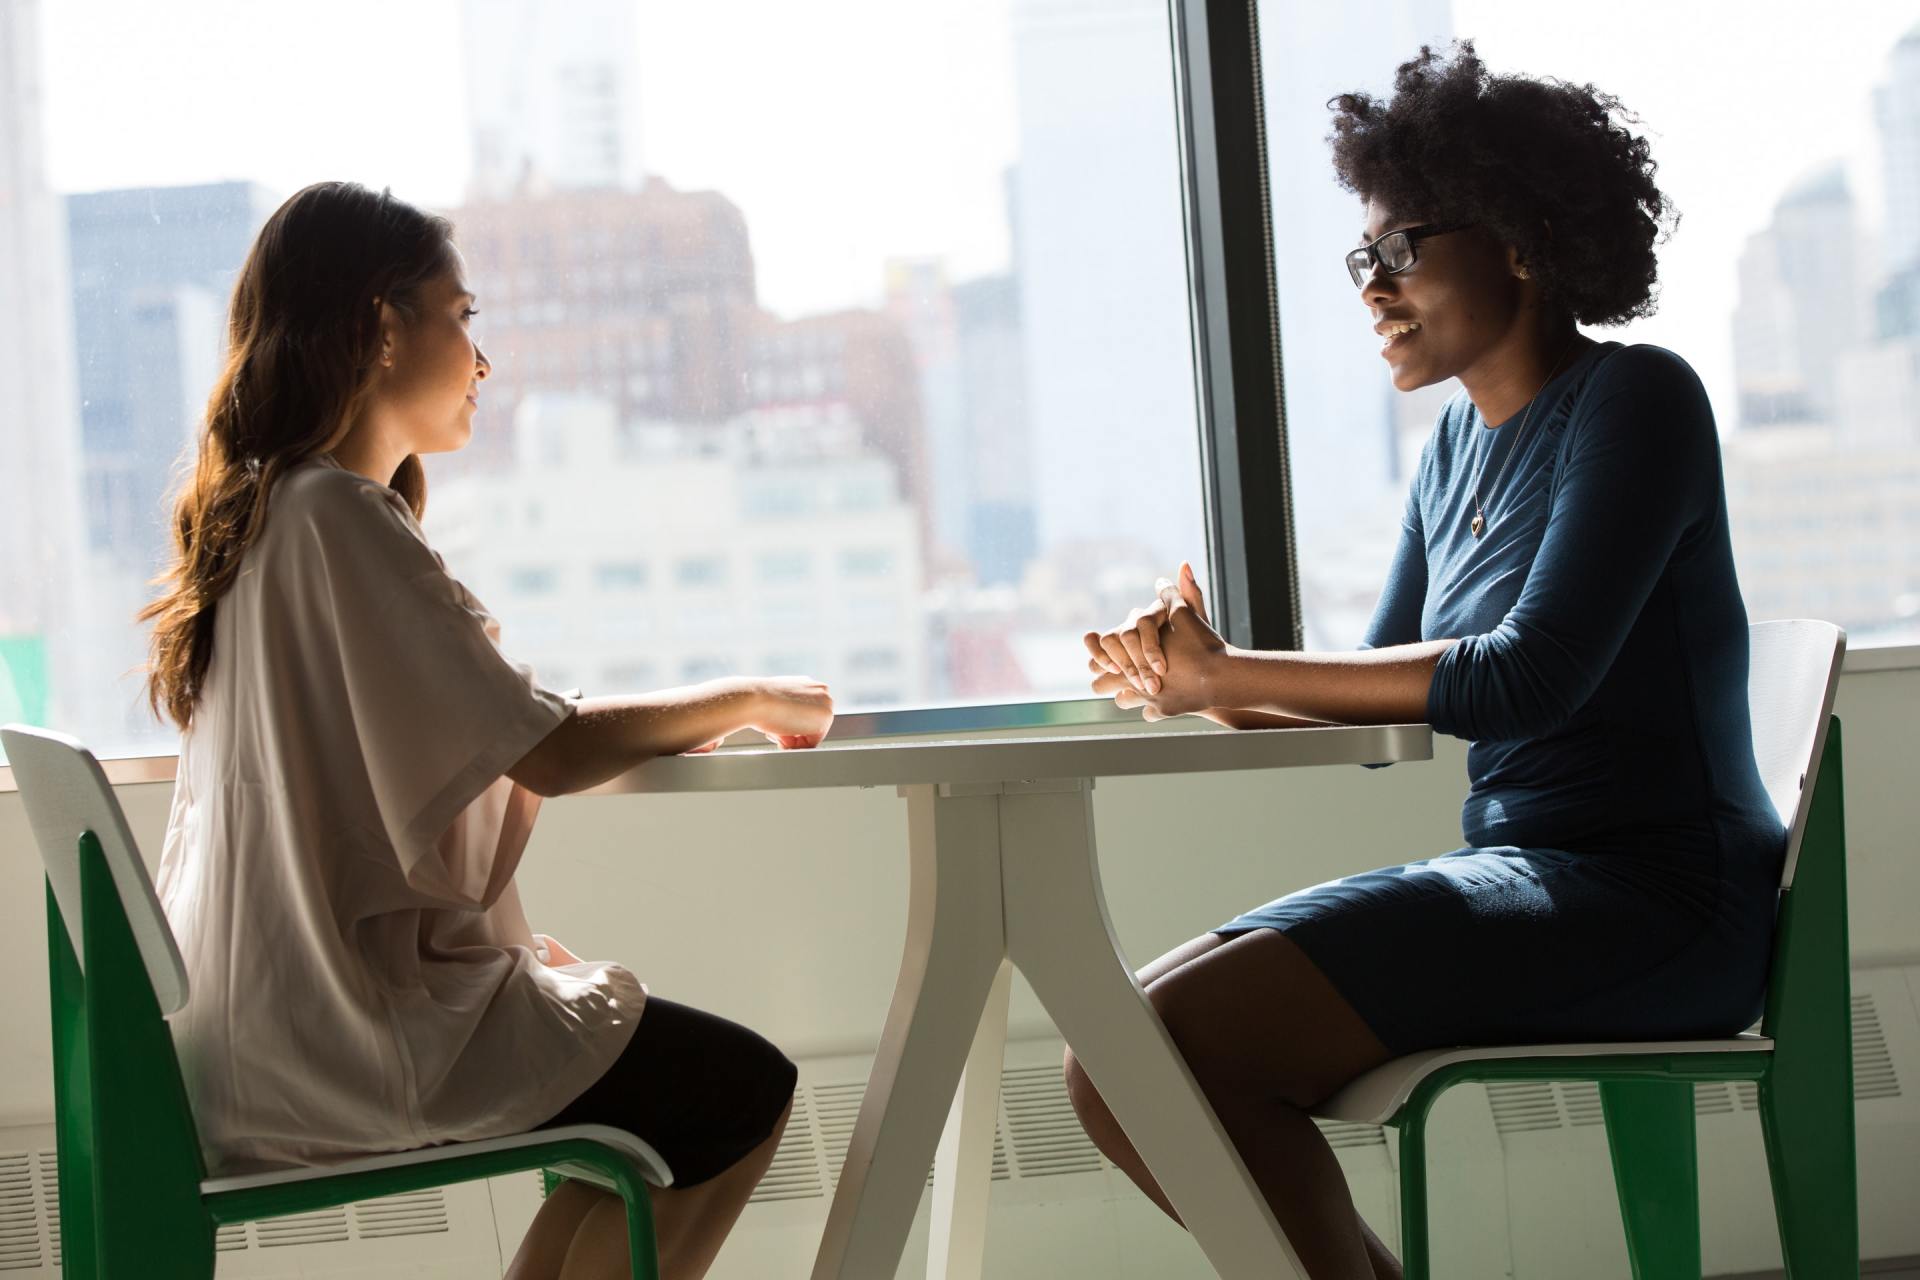 Two women sitting at a desk talking.